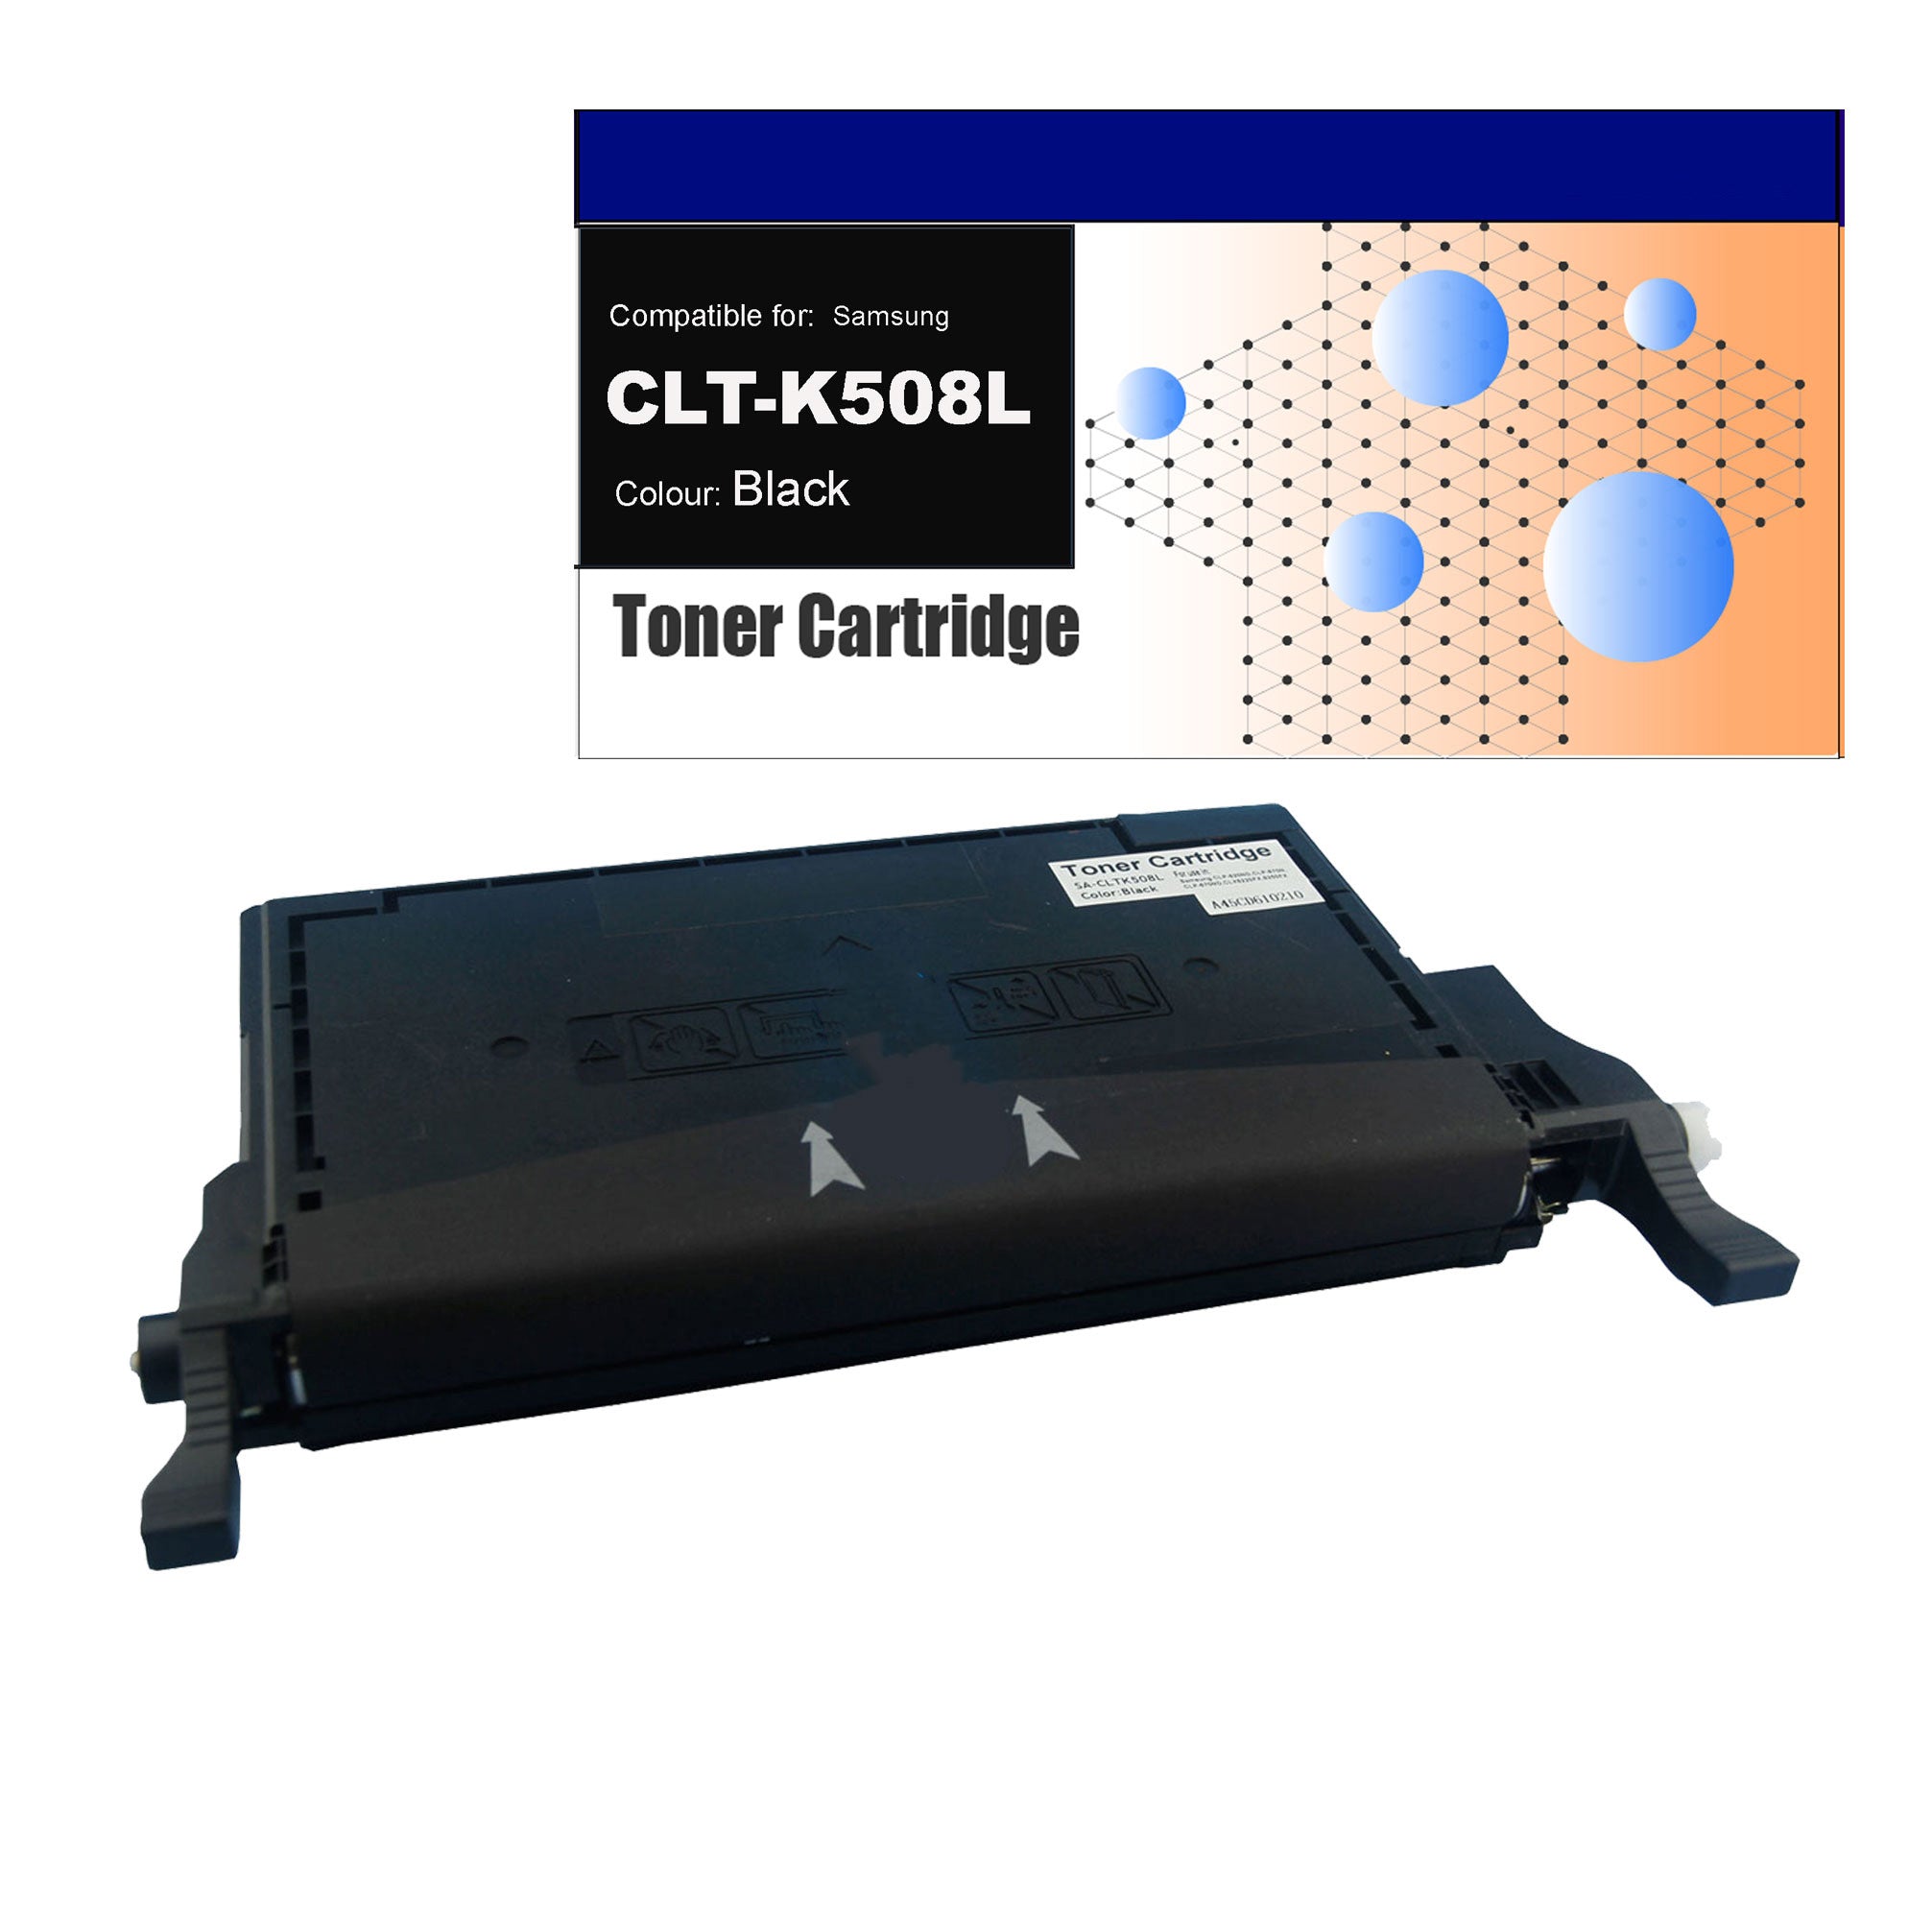 Compatible Toner for Samsung CLT-K508L Black Toner Cartridges